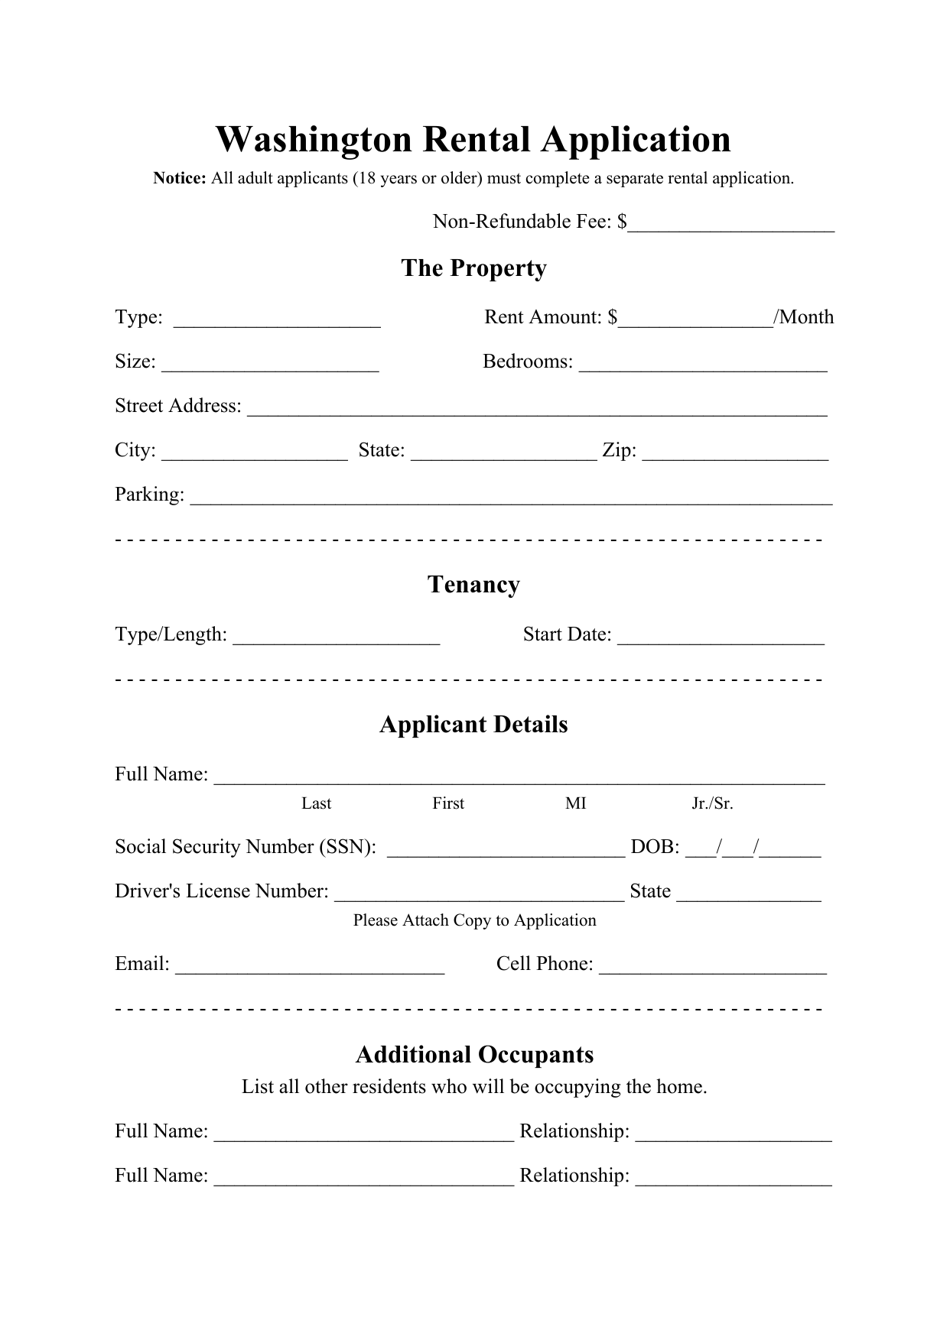 Rental Application Form - Washington, Page 1